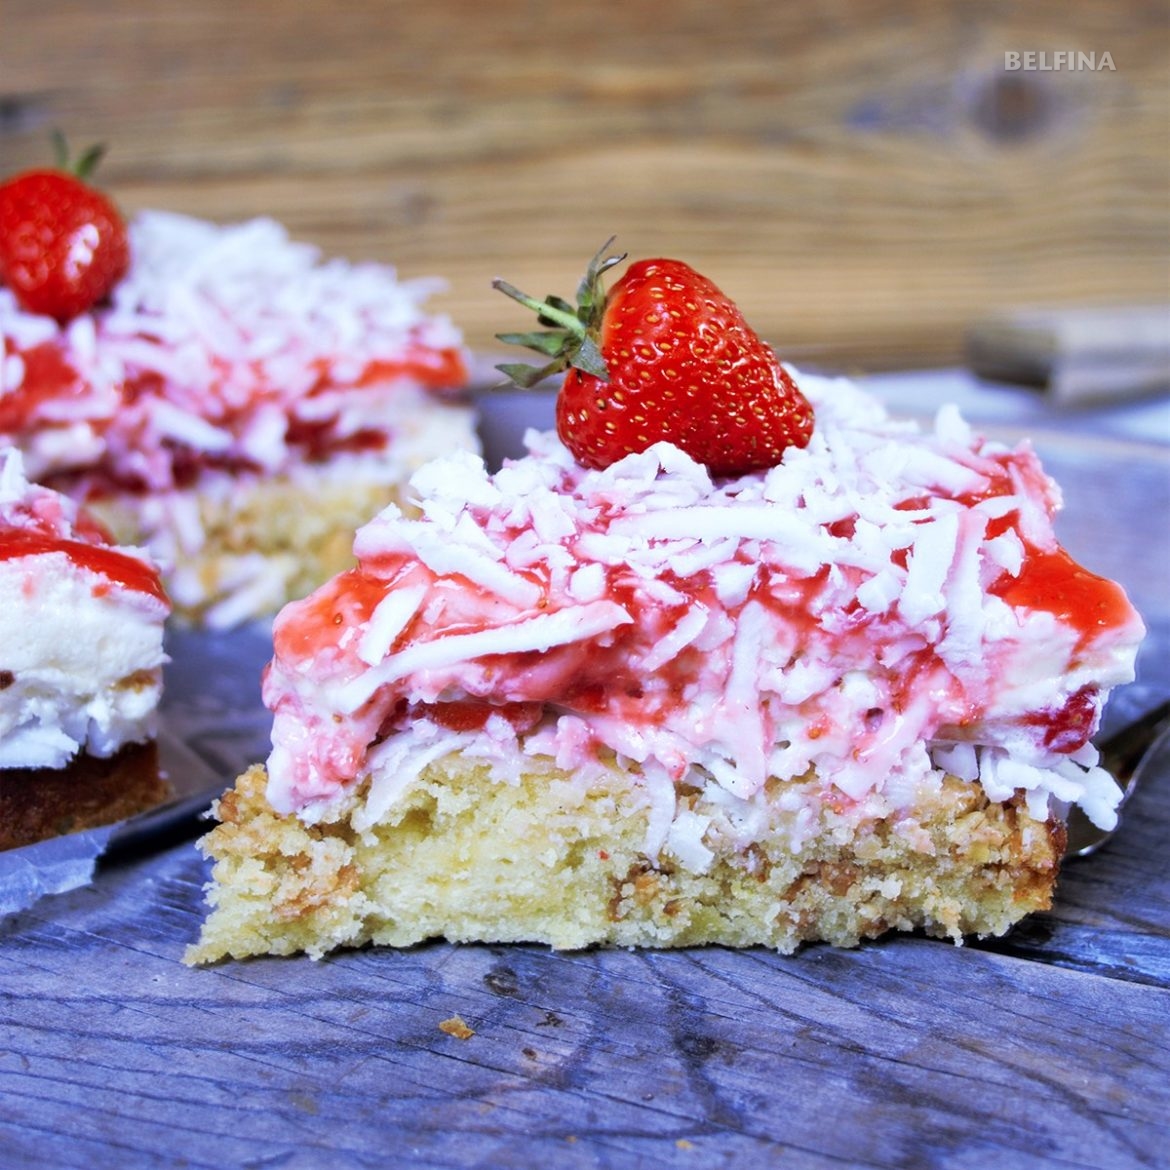 Erdbeer-Kokos Torte... - Tinas Kochblog von BELFINA